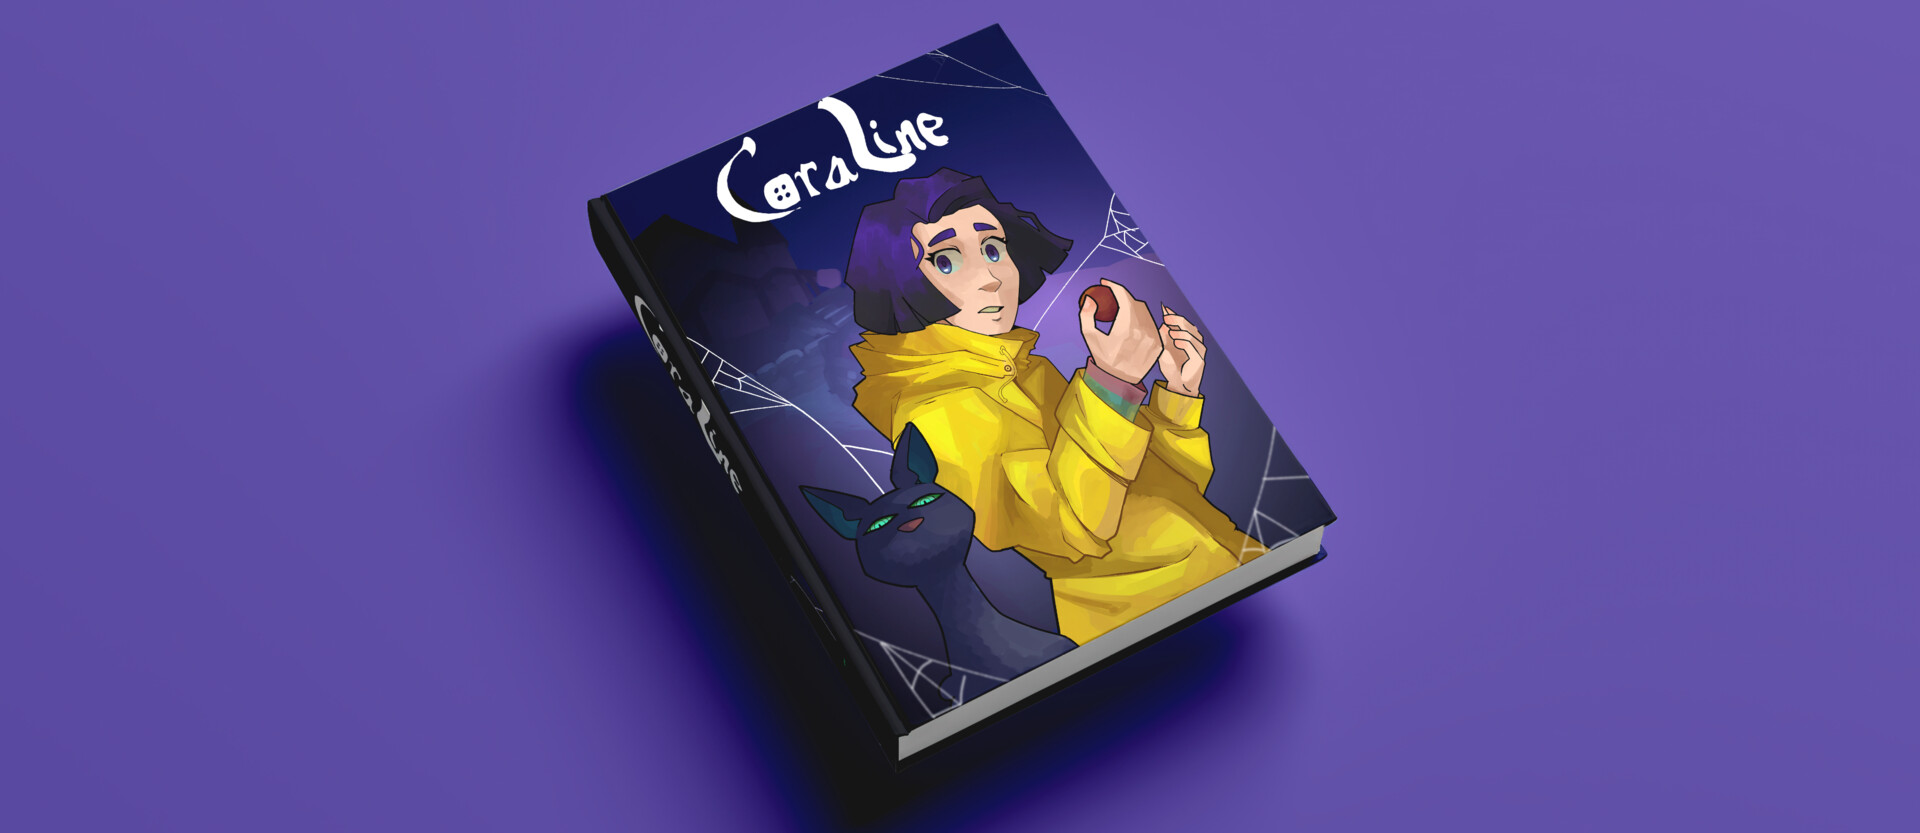 ArtStation - Coraline Book Cover Design